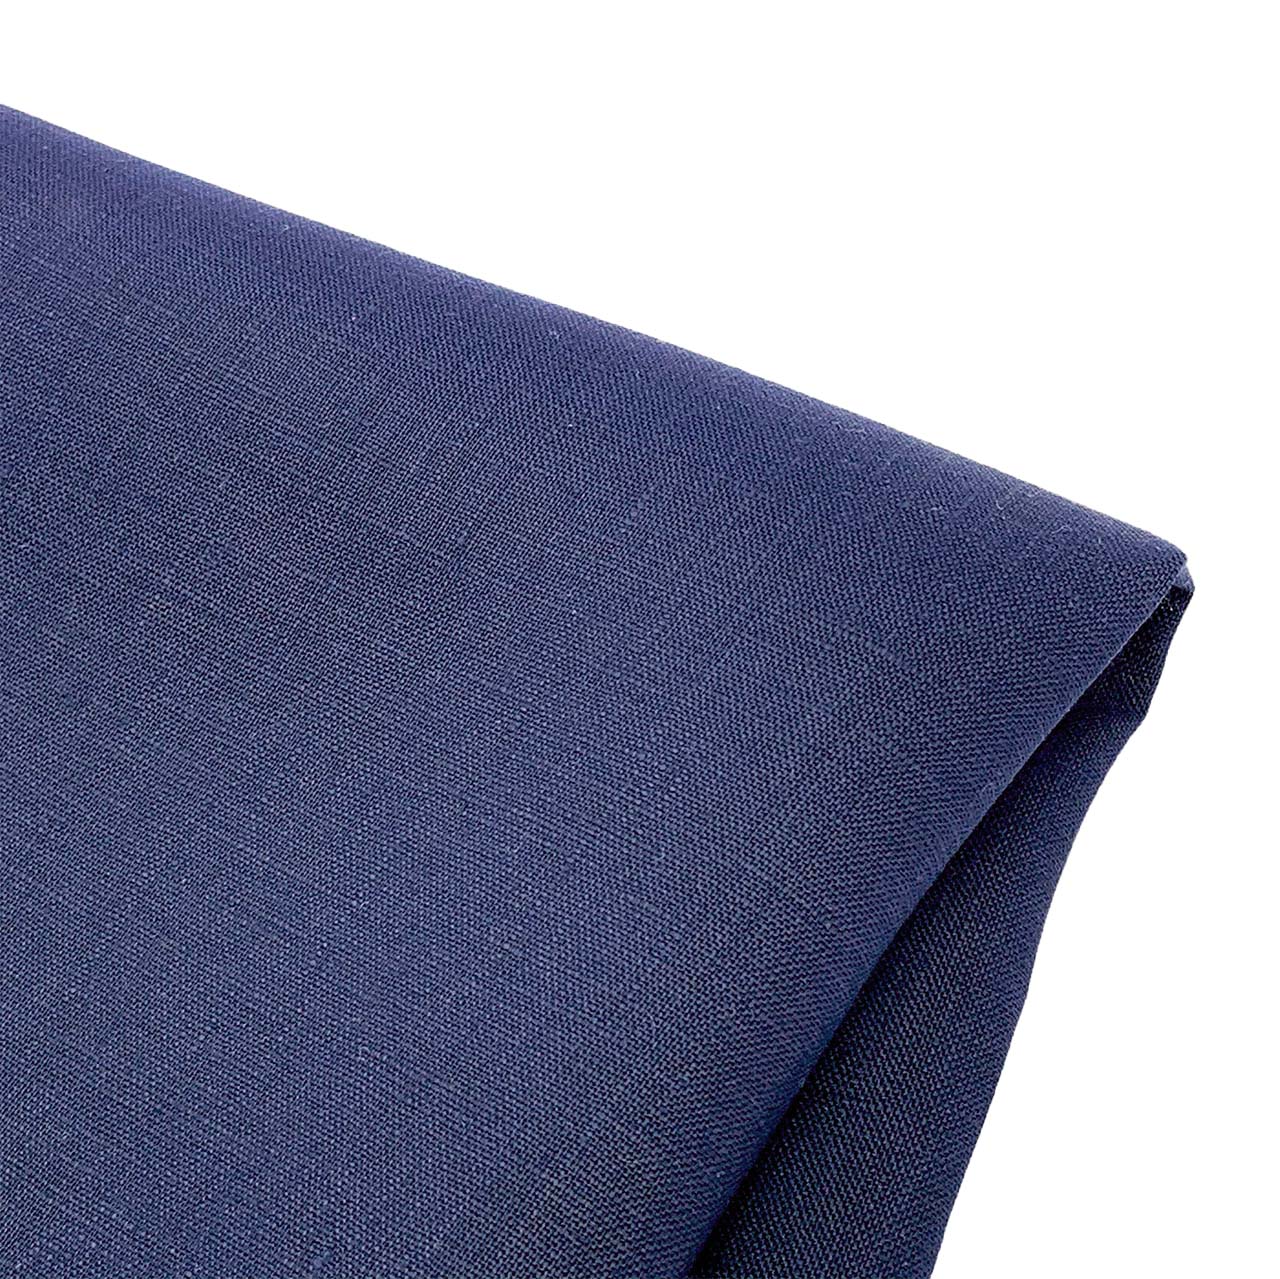 linen fabric heavy weight oxford blue linen - moda fabric collection